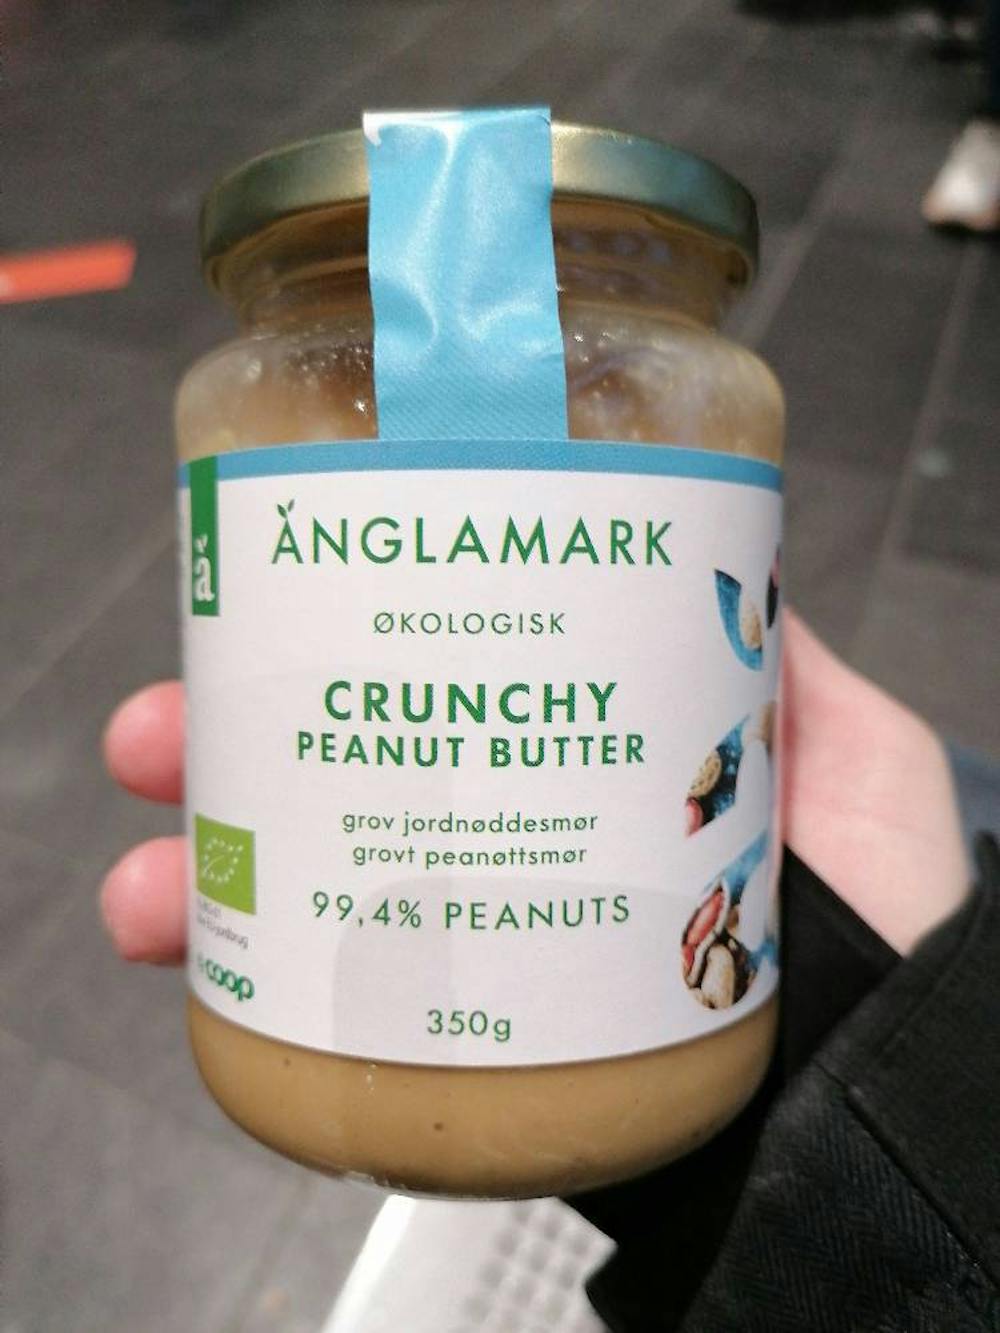 Økologisk crunchy peanut butter, Coop Änglamark